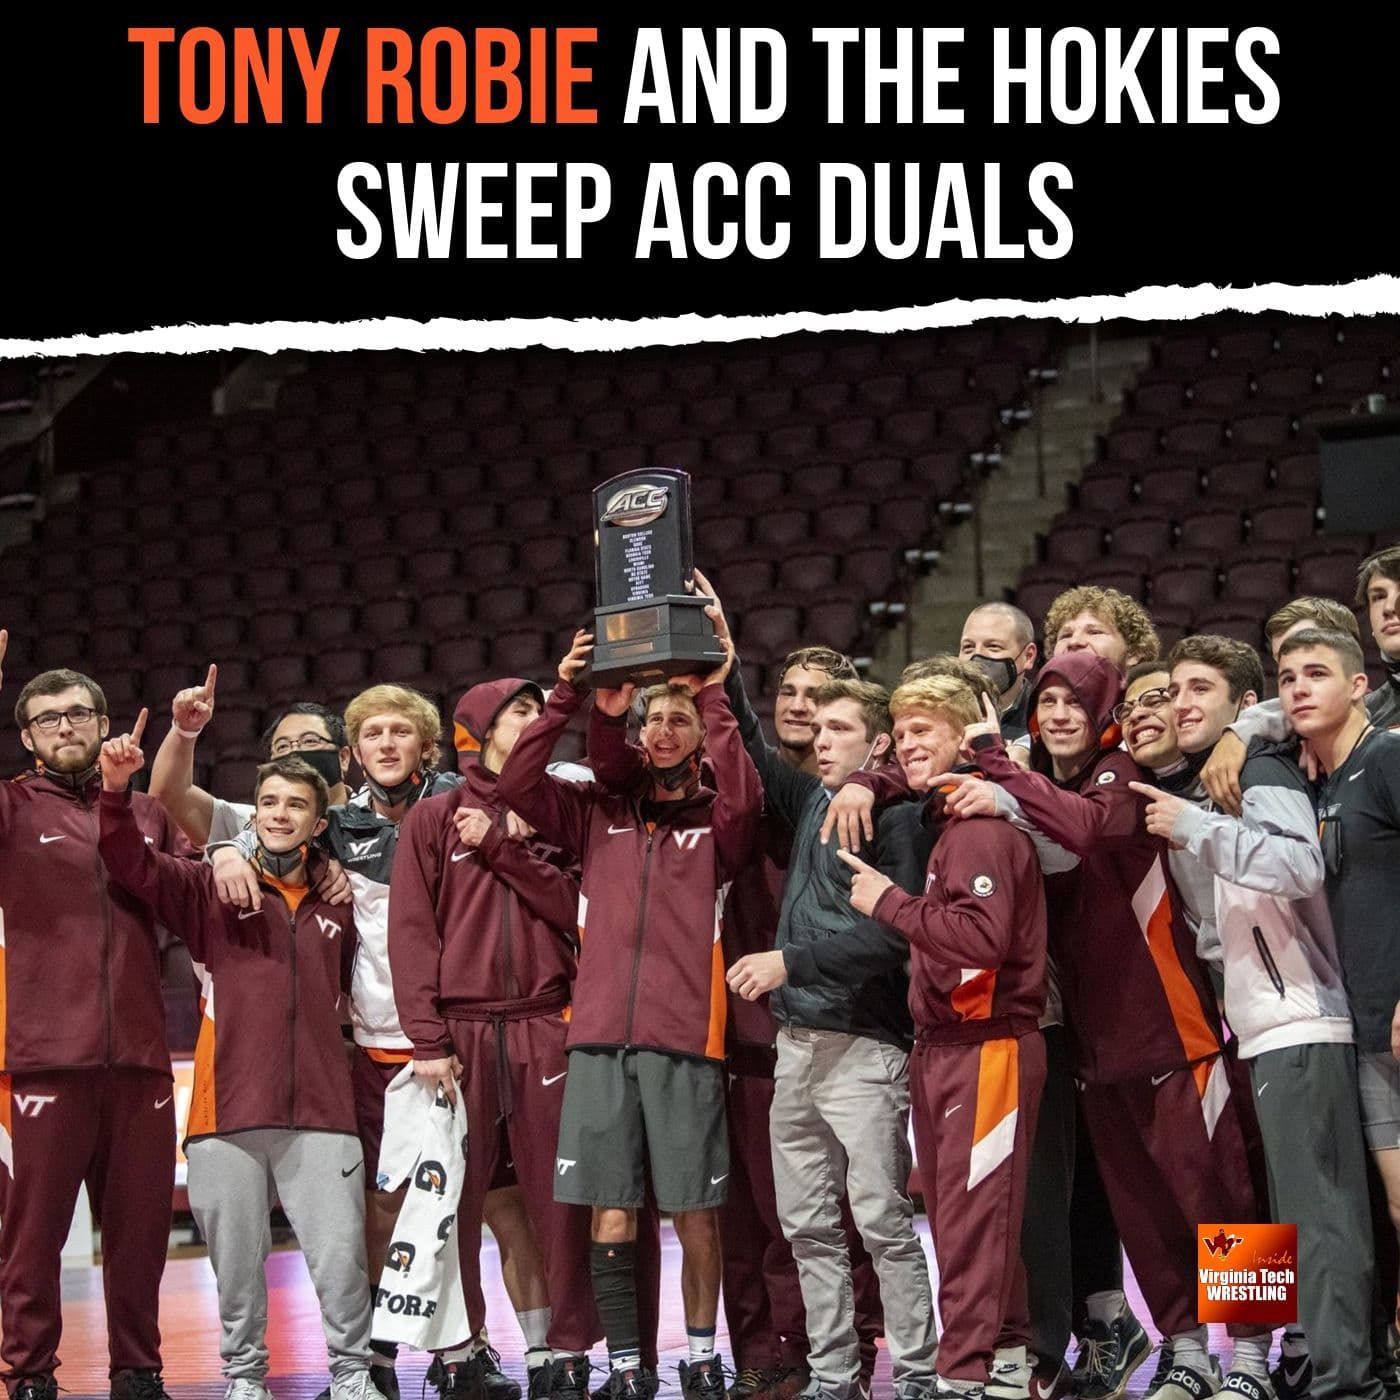 Tony Robie and the Hokies sweep the ACC to win regular season crown